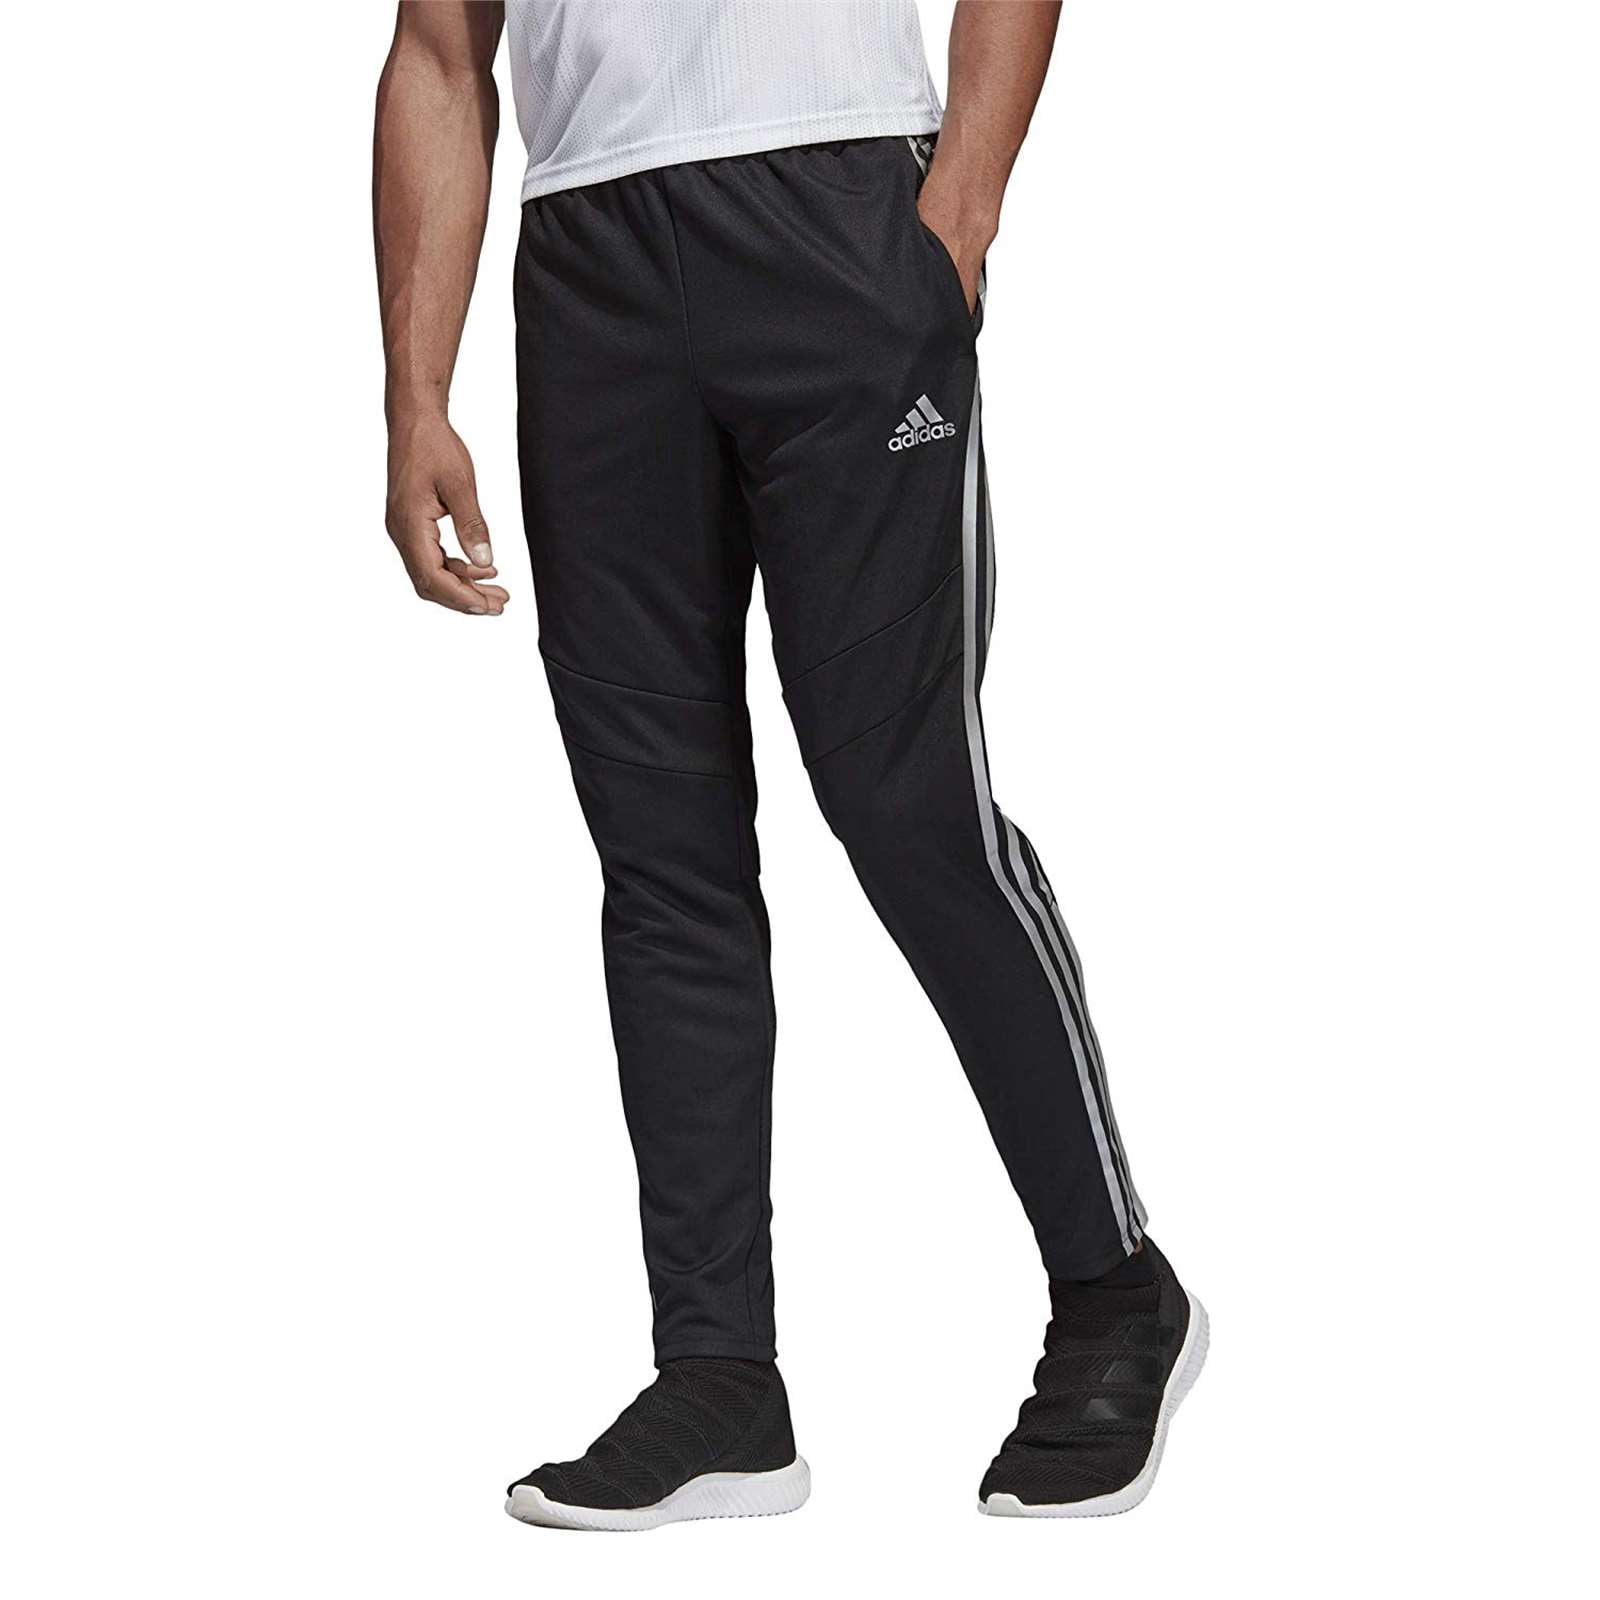 New Adidas 19 Climacool Men's Athletic Workout Training Pants Walmart.com